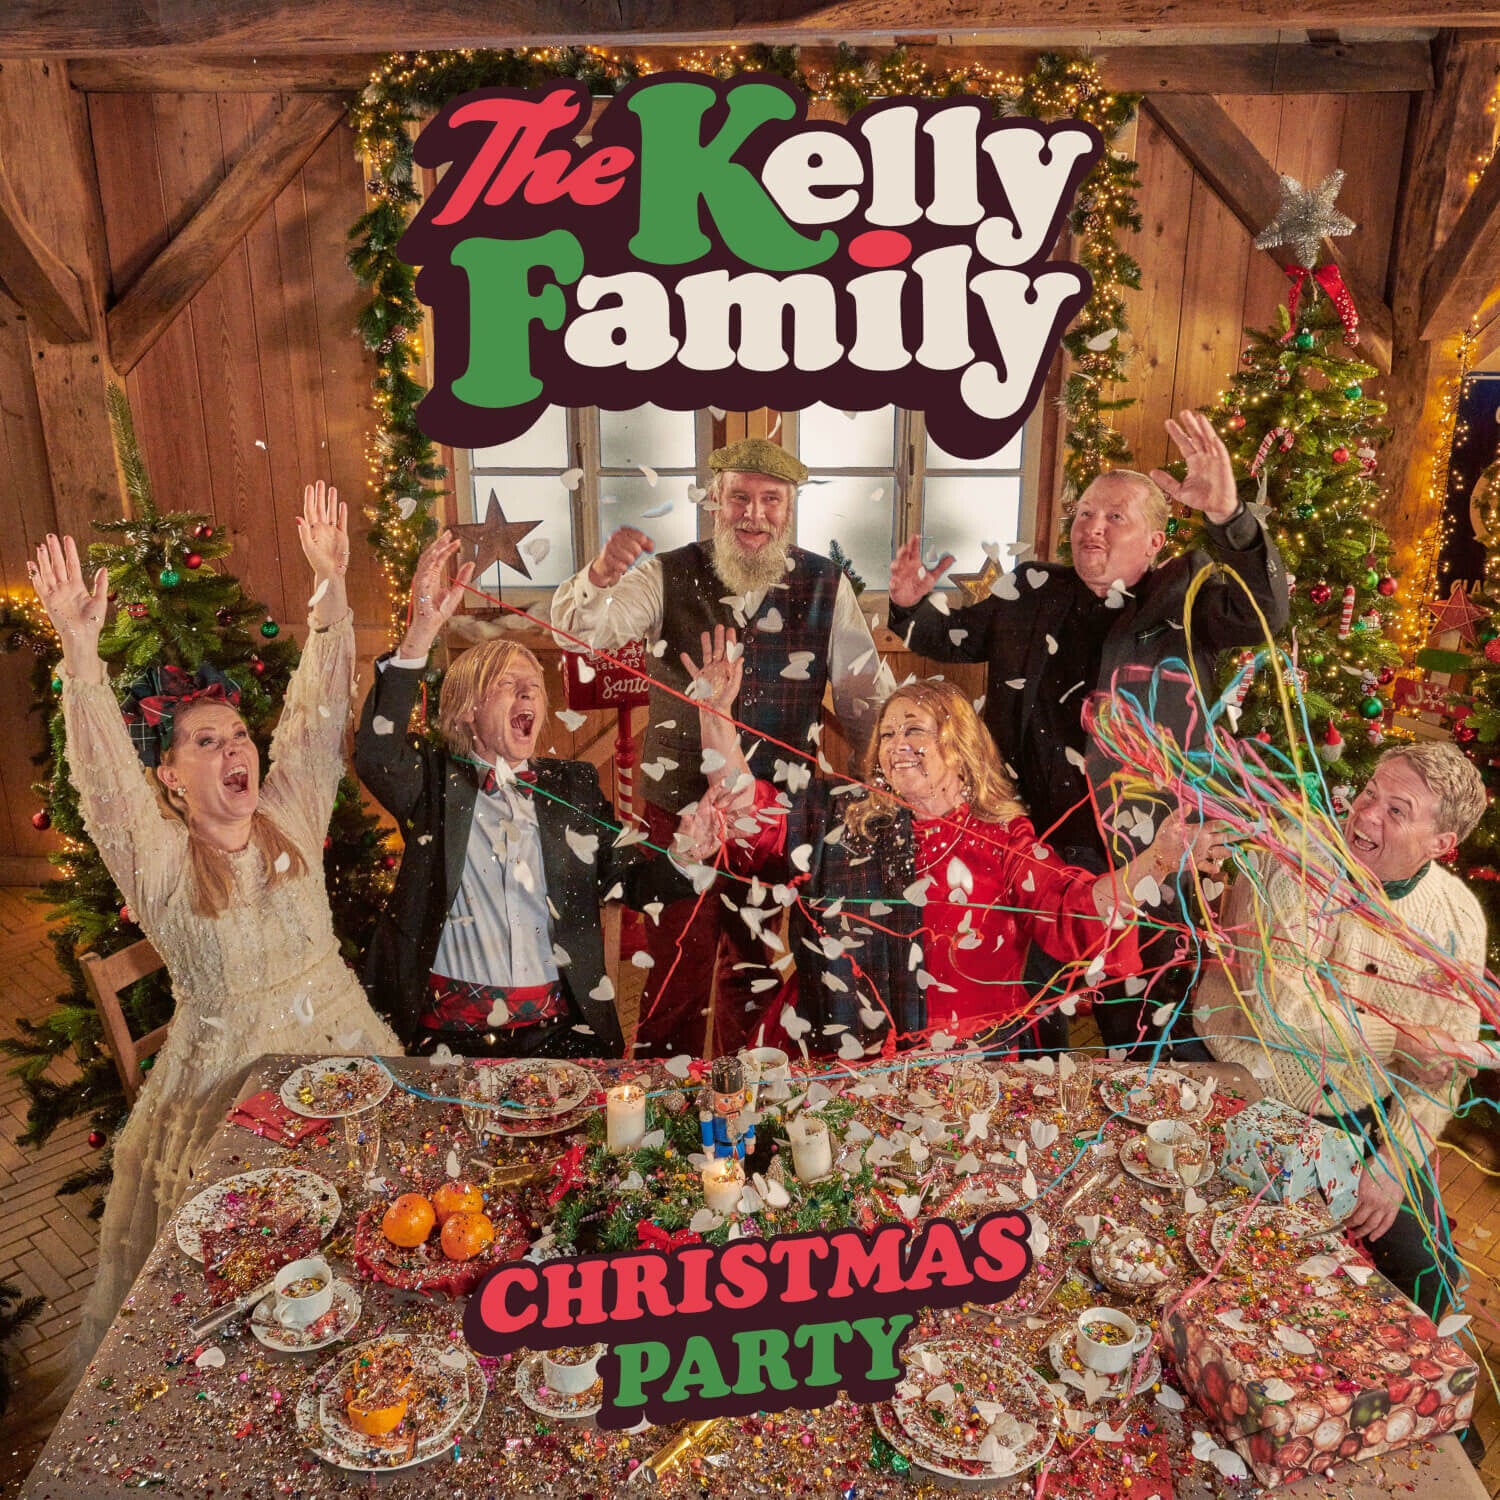 https://images.bravado.de/prod/product-assets/product-asset-data/kelly-family-the/kelly-family/products/143388/web/324954/image-thumb__324954__3000x3000_original/The-Kelly-Family-Christmas-Party-Vinyl-143388-324954.jpg